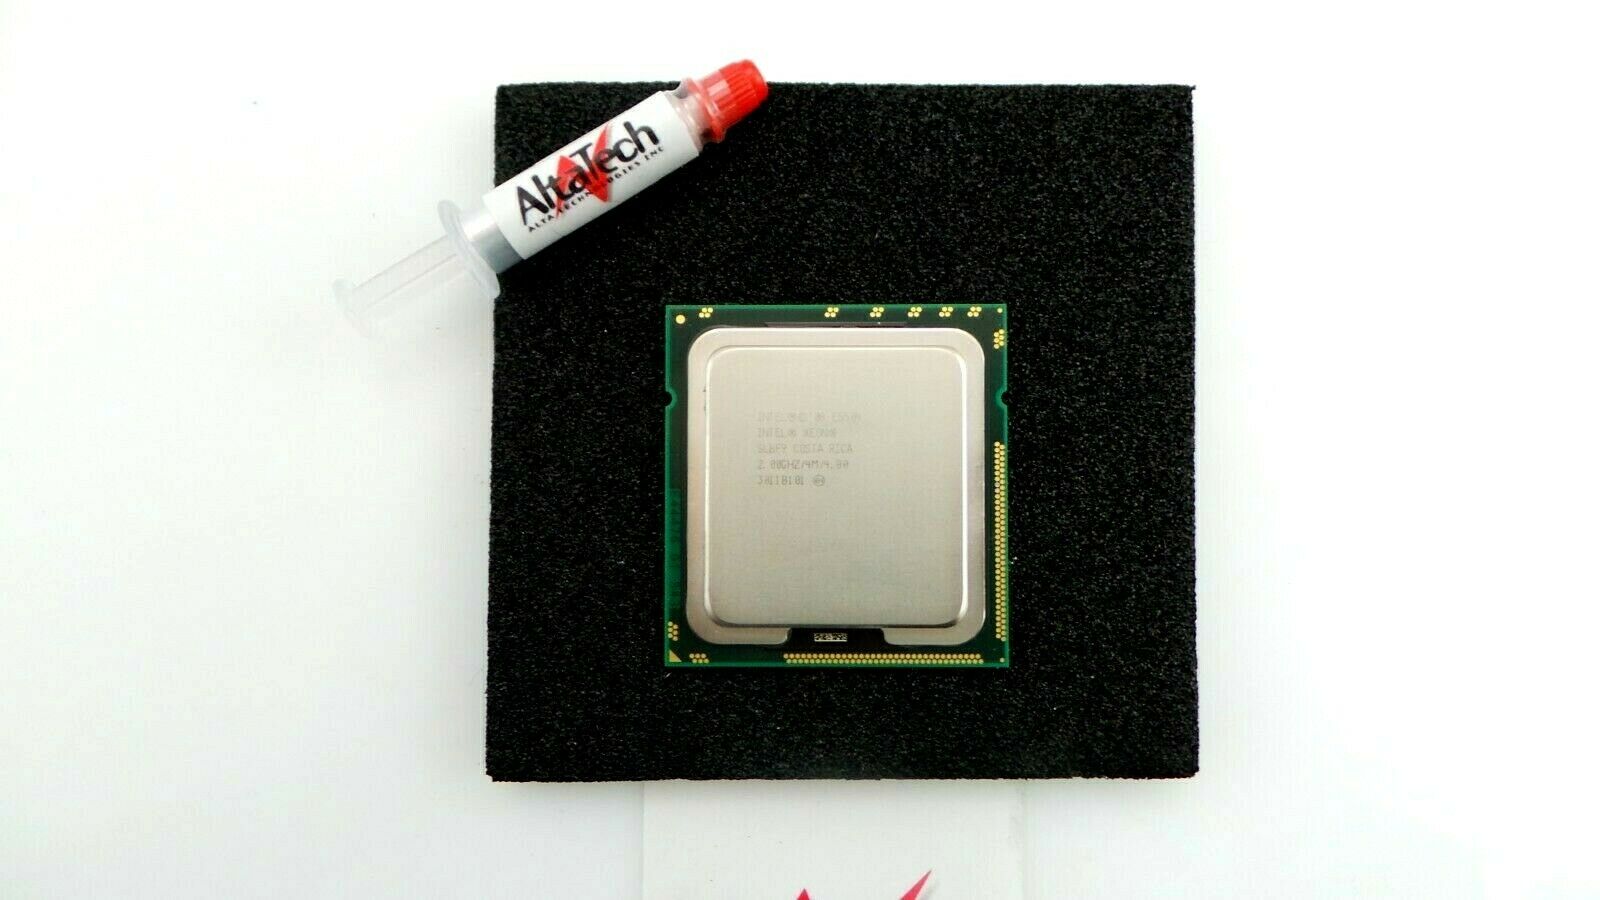 Intel E5504 2.0GGHZ/4MB/80W/4C, E5504, Used